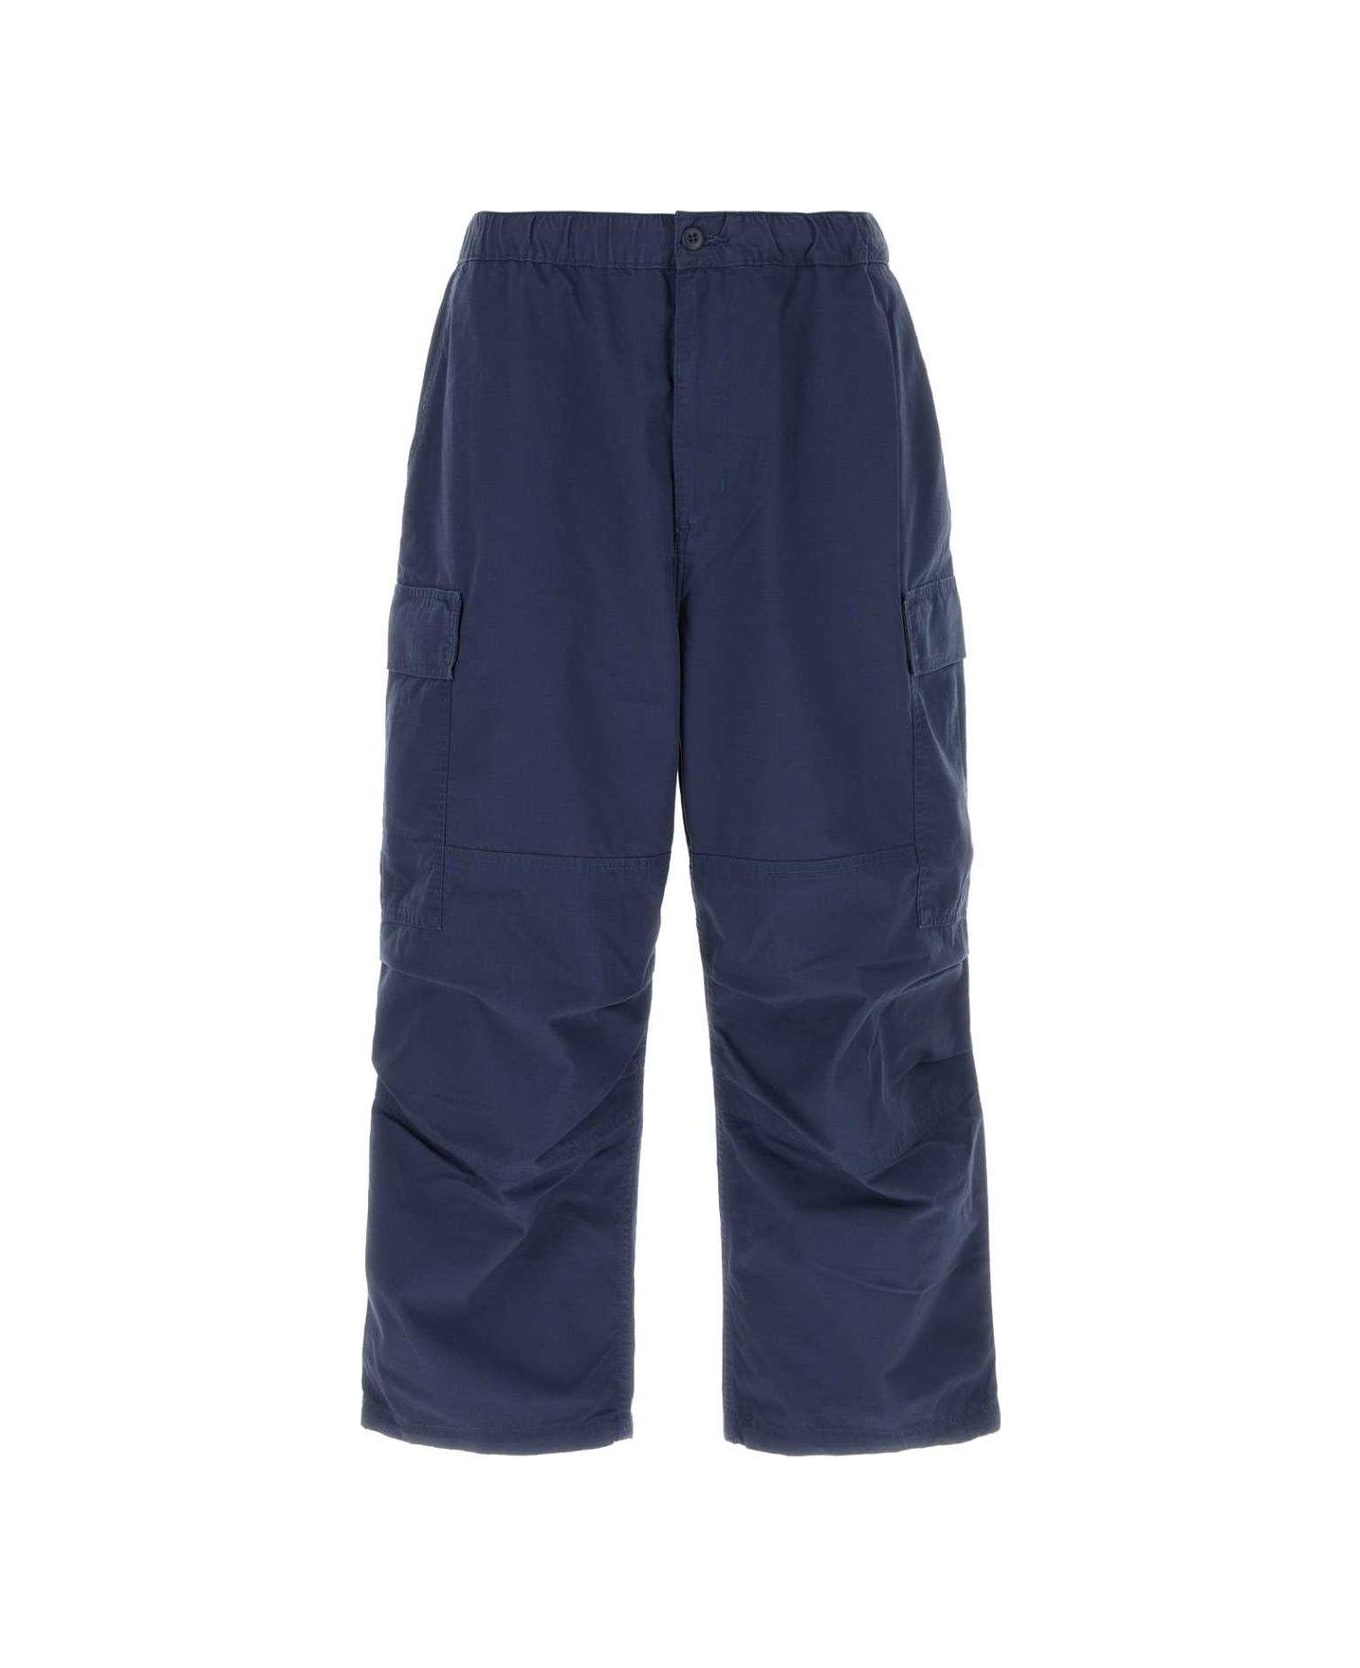 Carhartt Darted Knee Detailed Cargo Pants - Blue